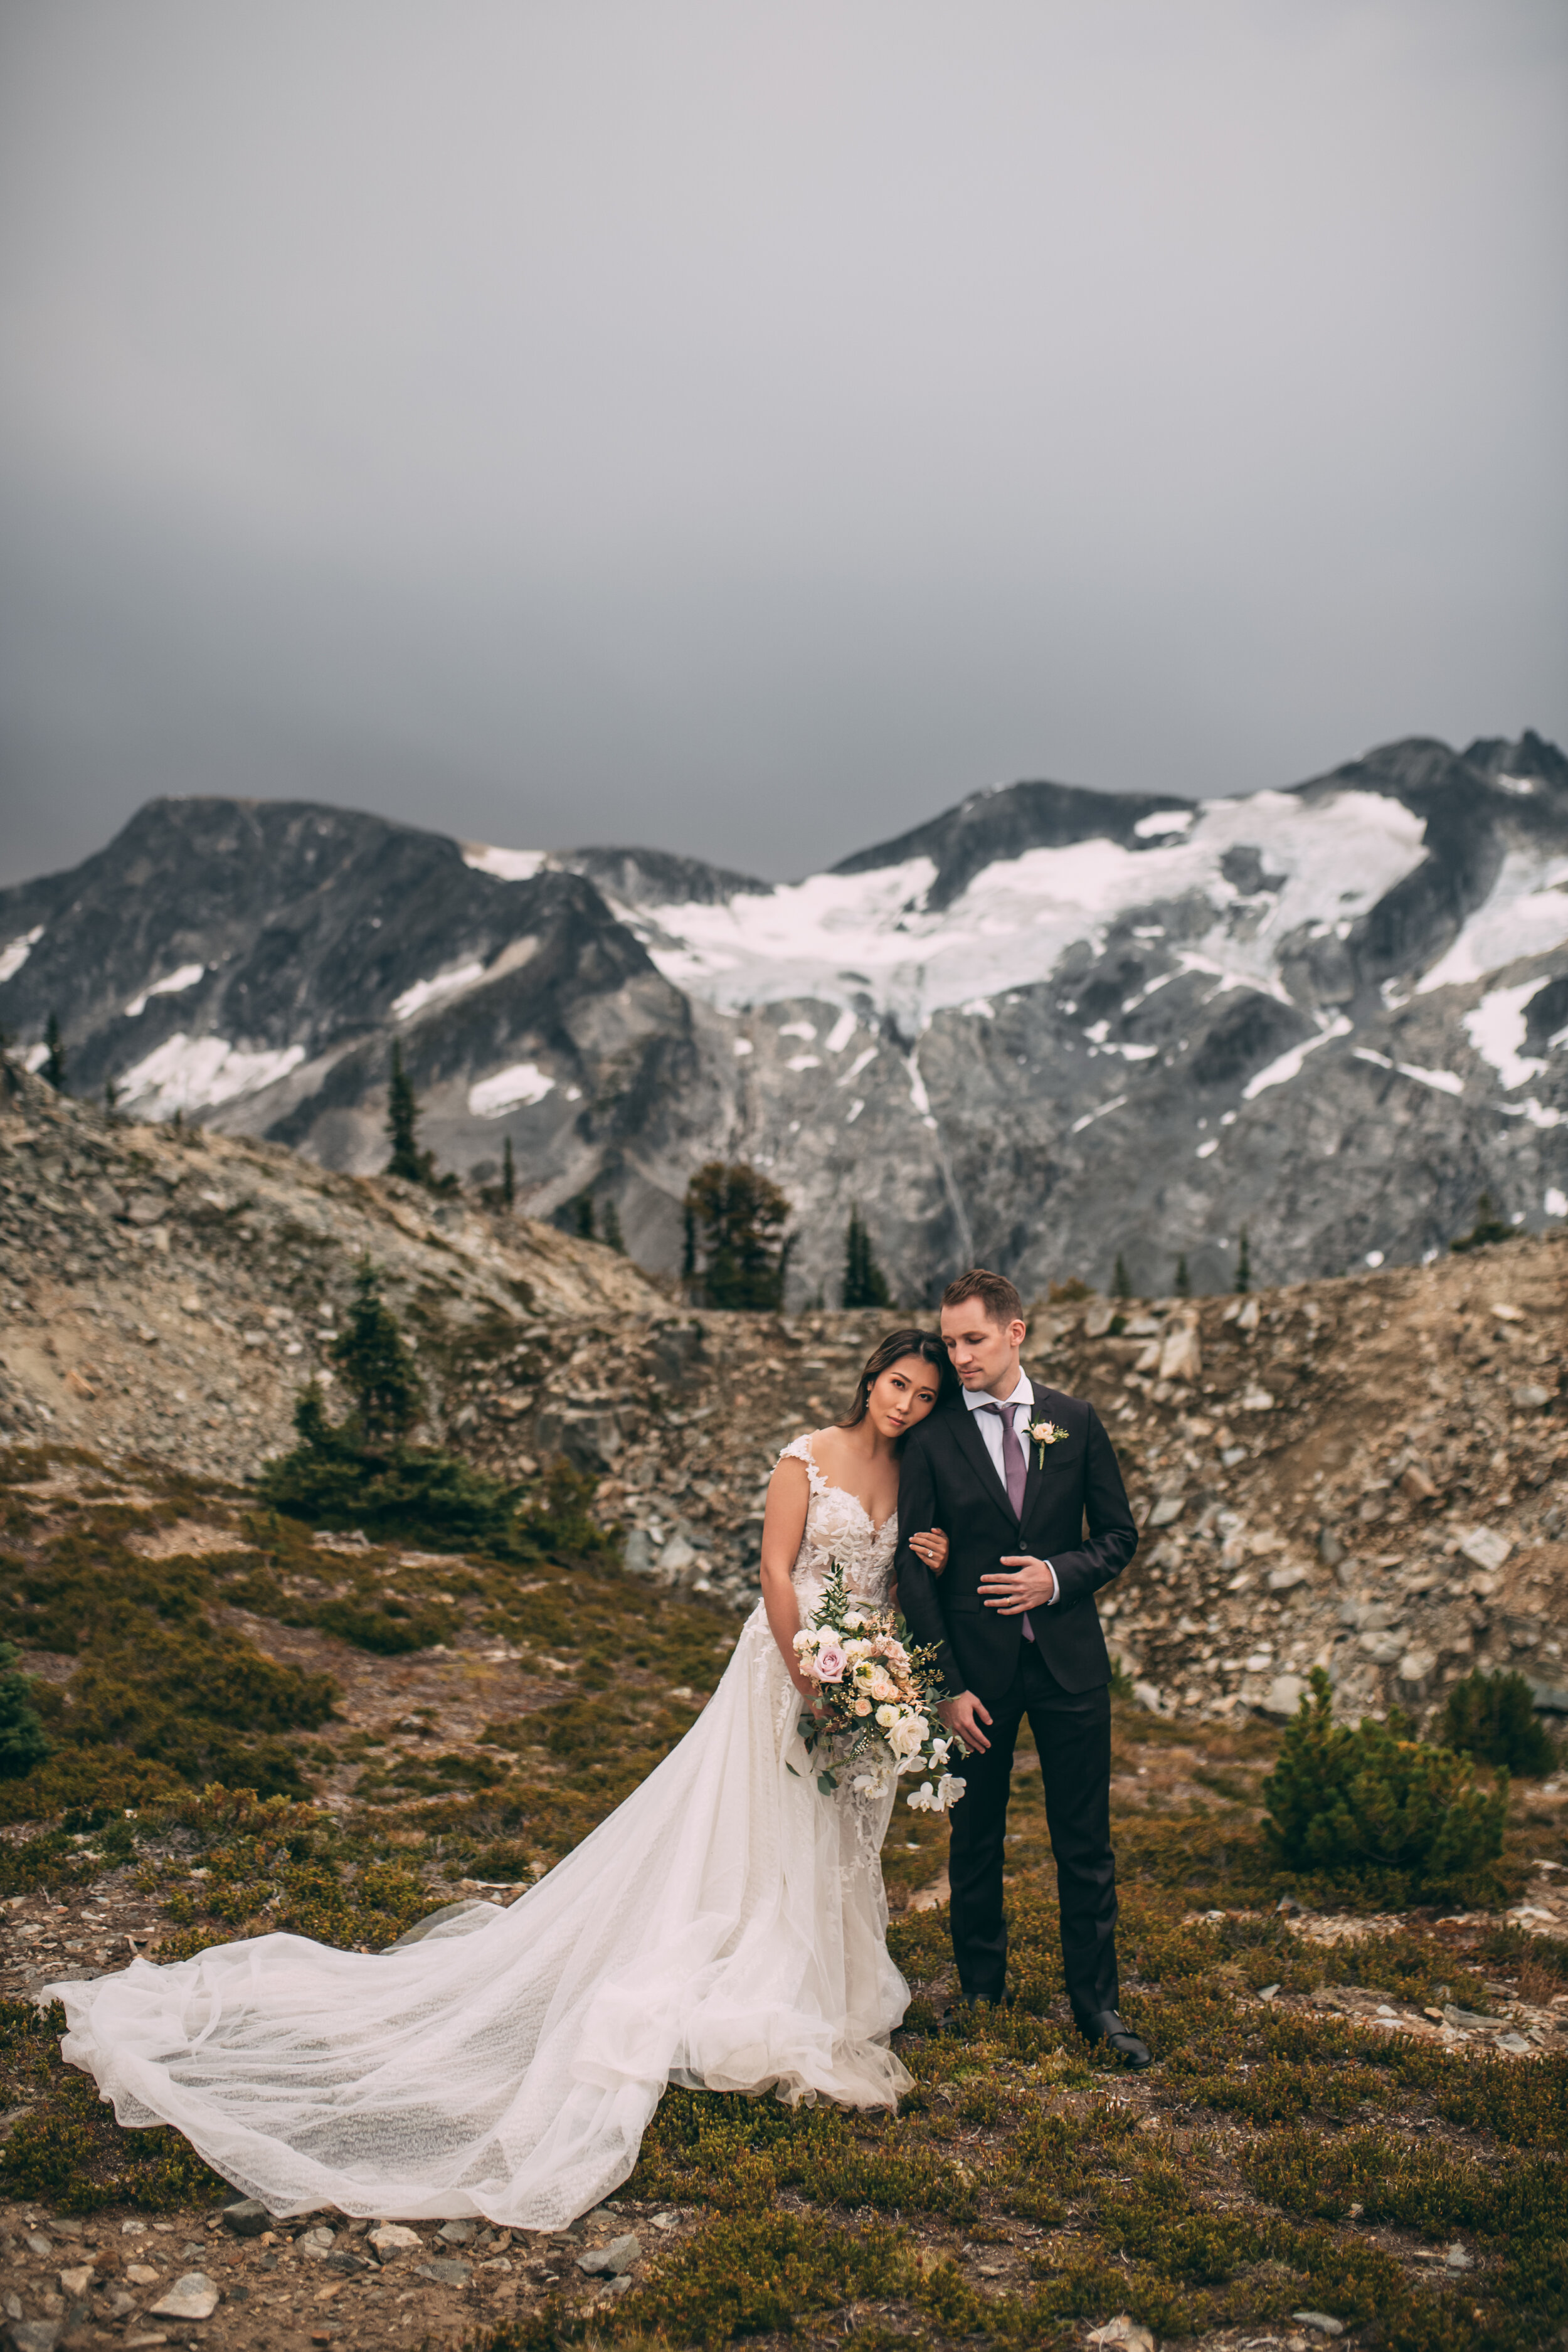 Katherine & Jamie Sneak Peeks - Mountain Top Elopement - Whistler BC - Laura Olson Photography--9.jpg